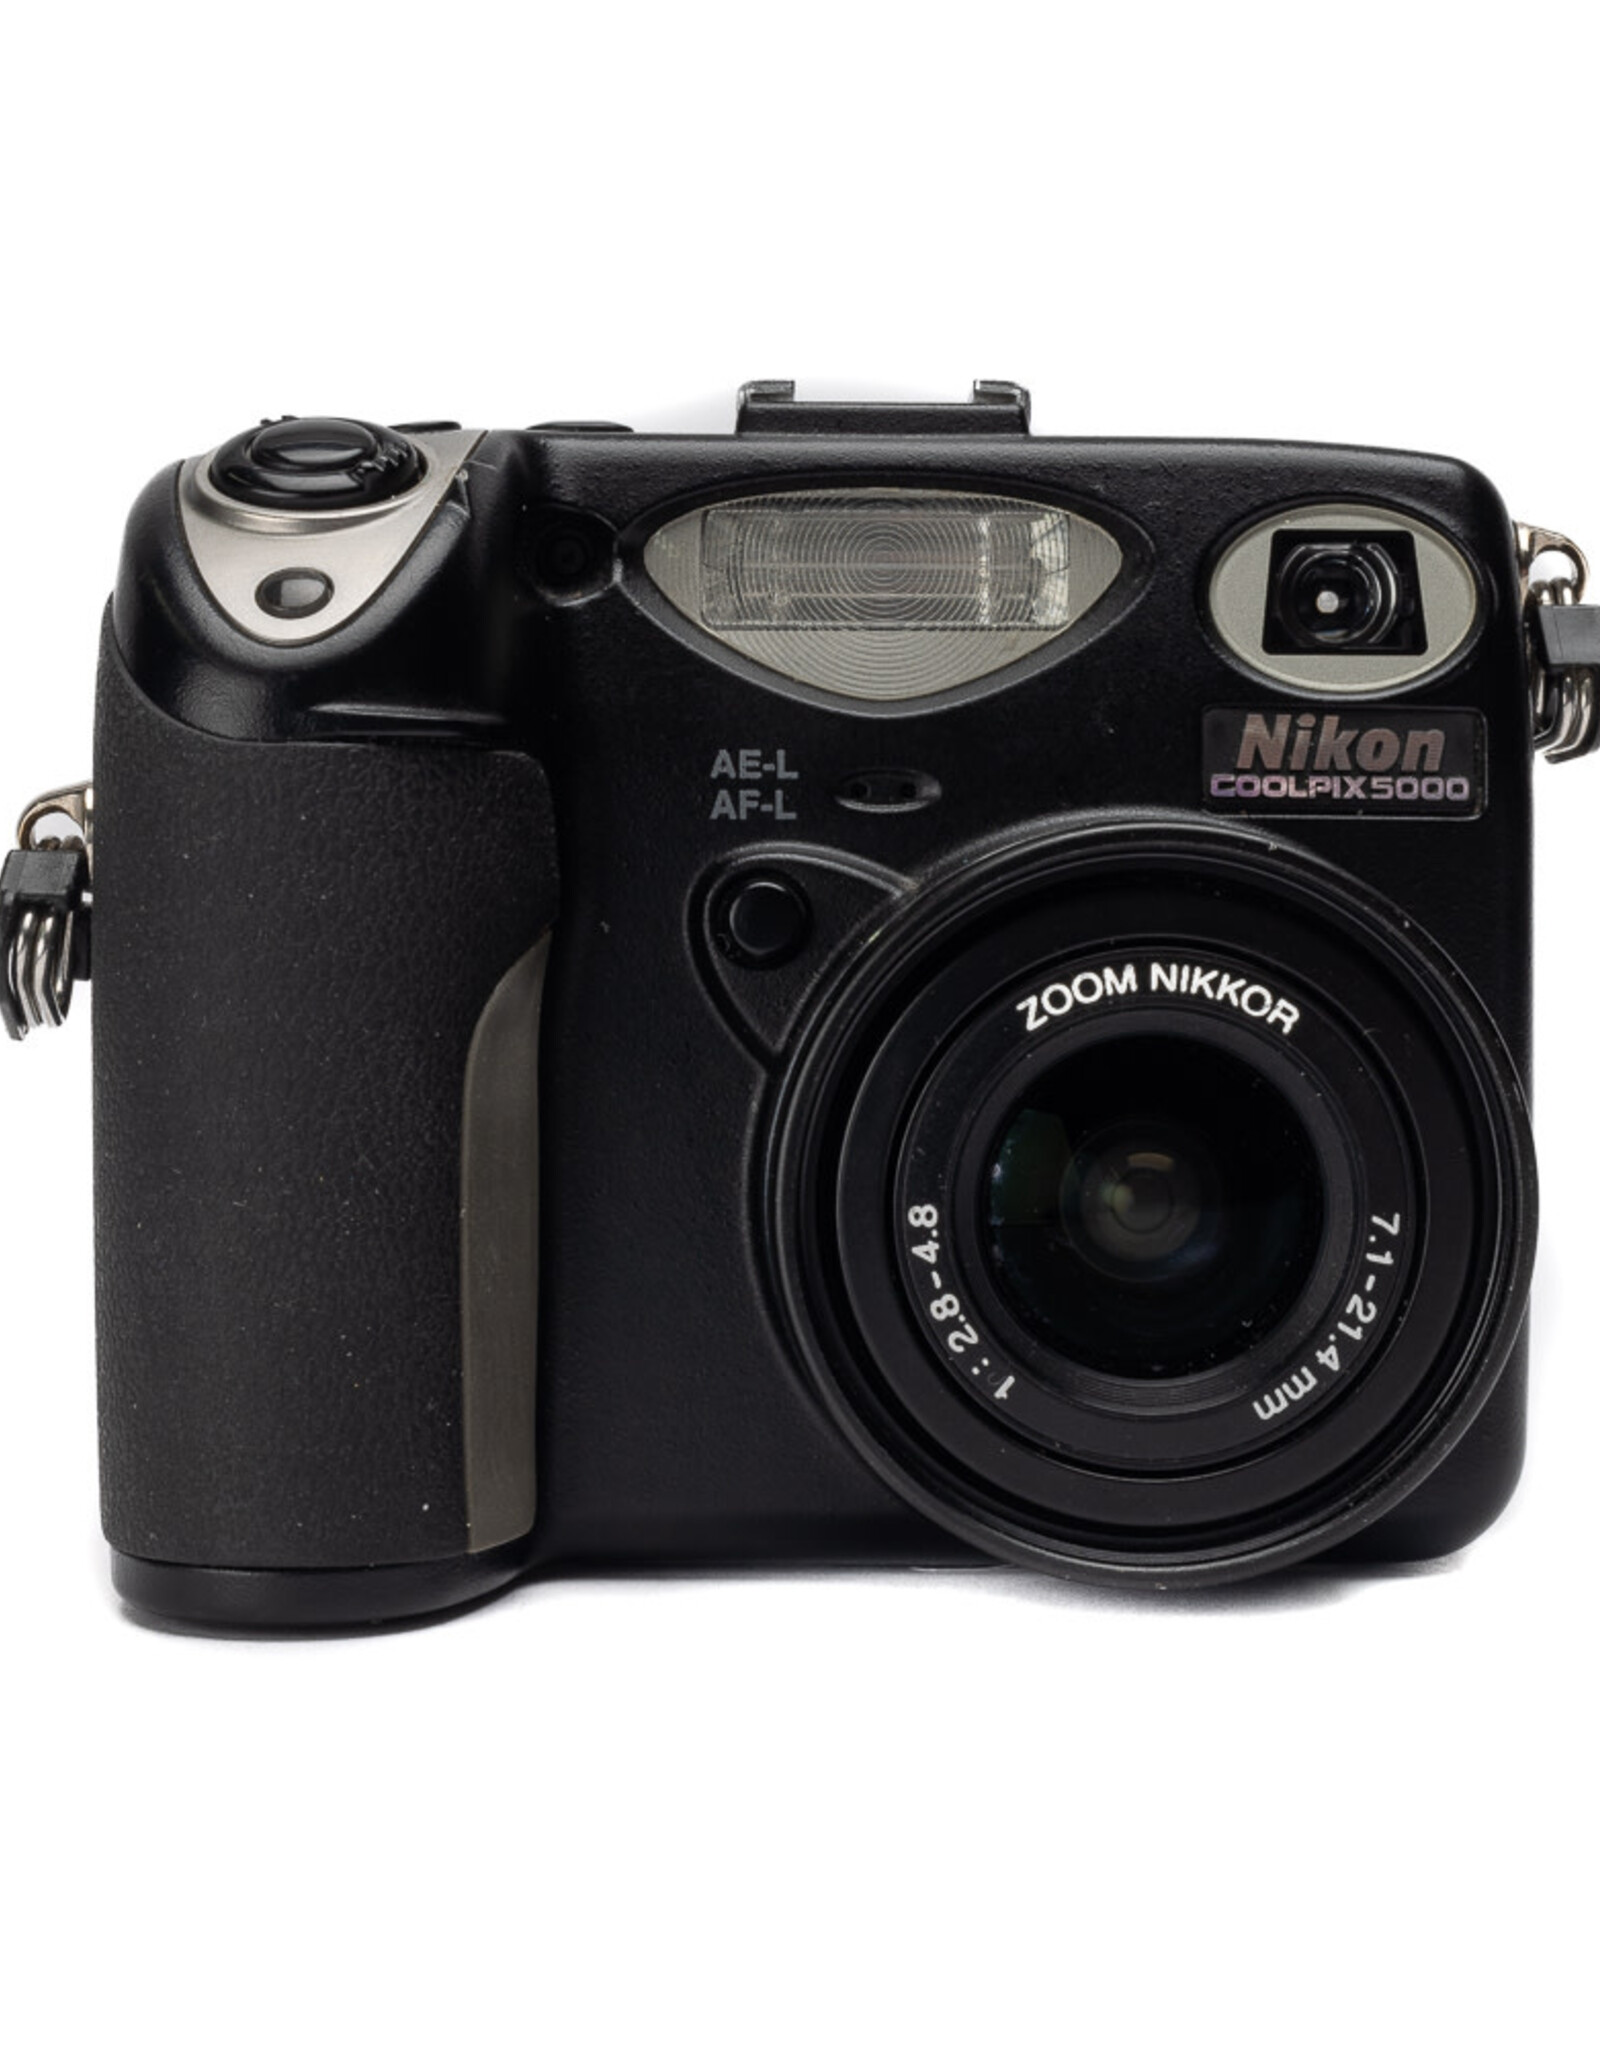 Nikon Nikon COOLPIX 5000 5.0MP Digital Camera